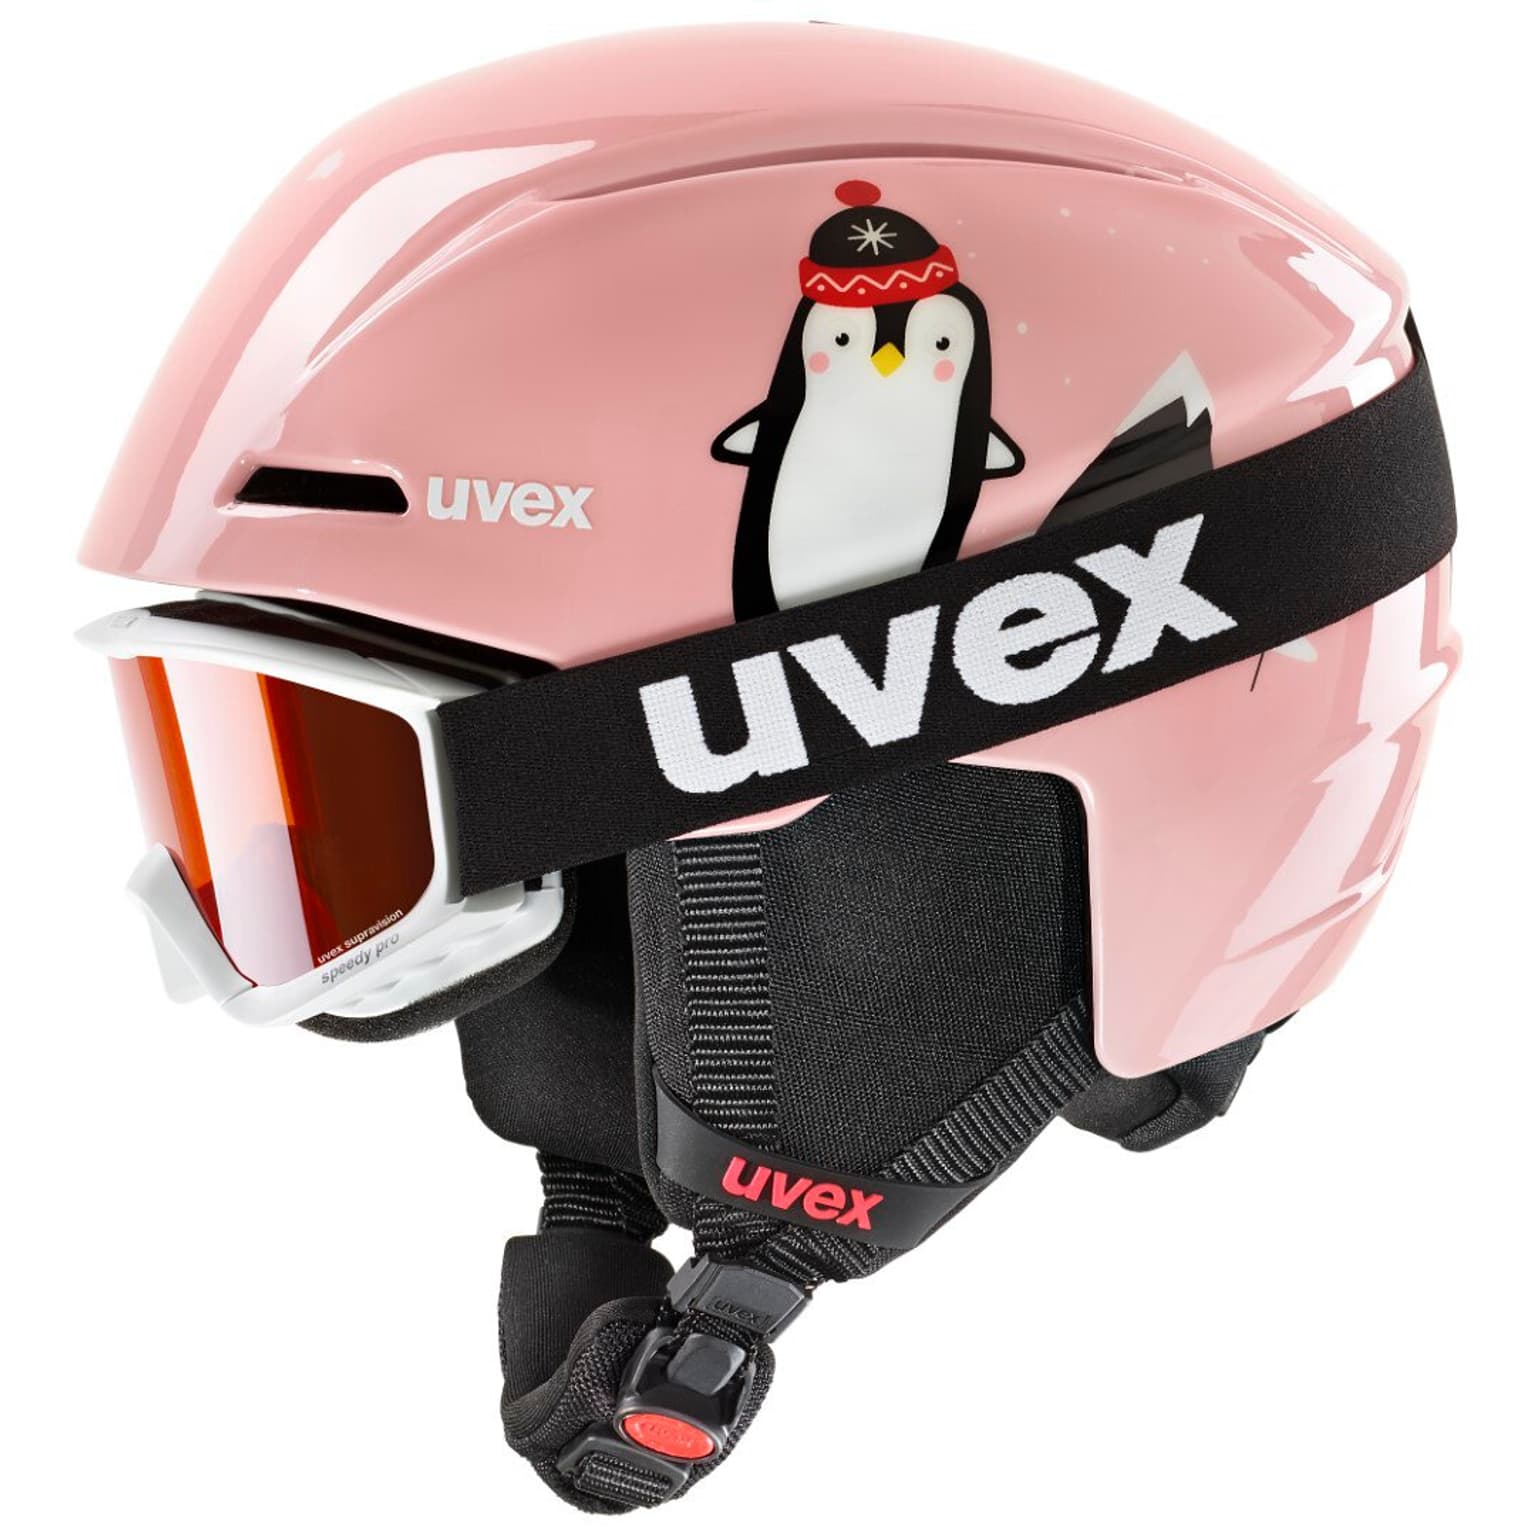 Uvex Uvex viti set Casque de ski saumon 1